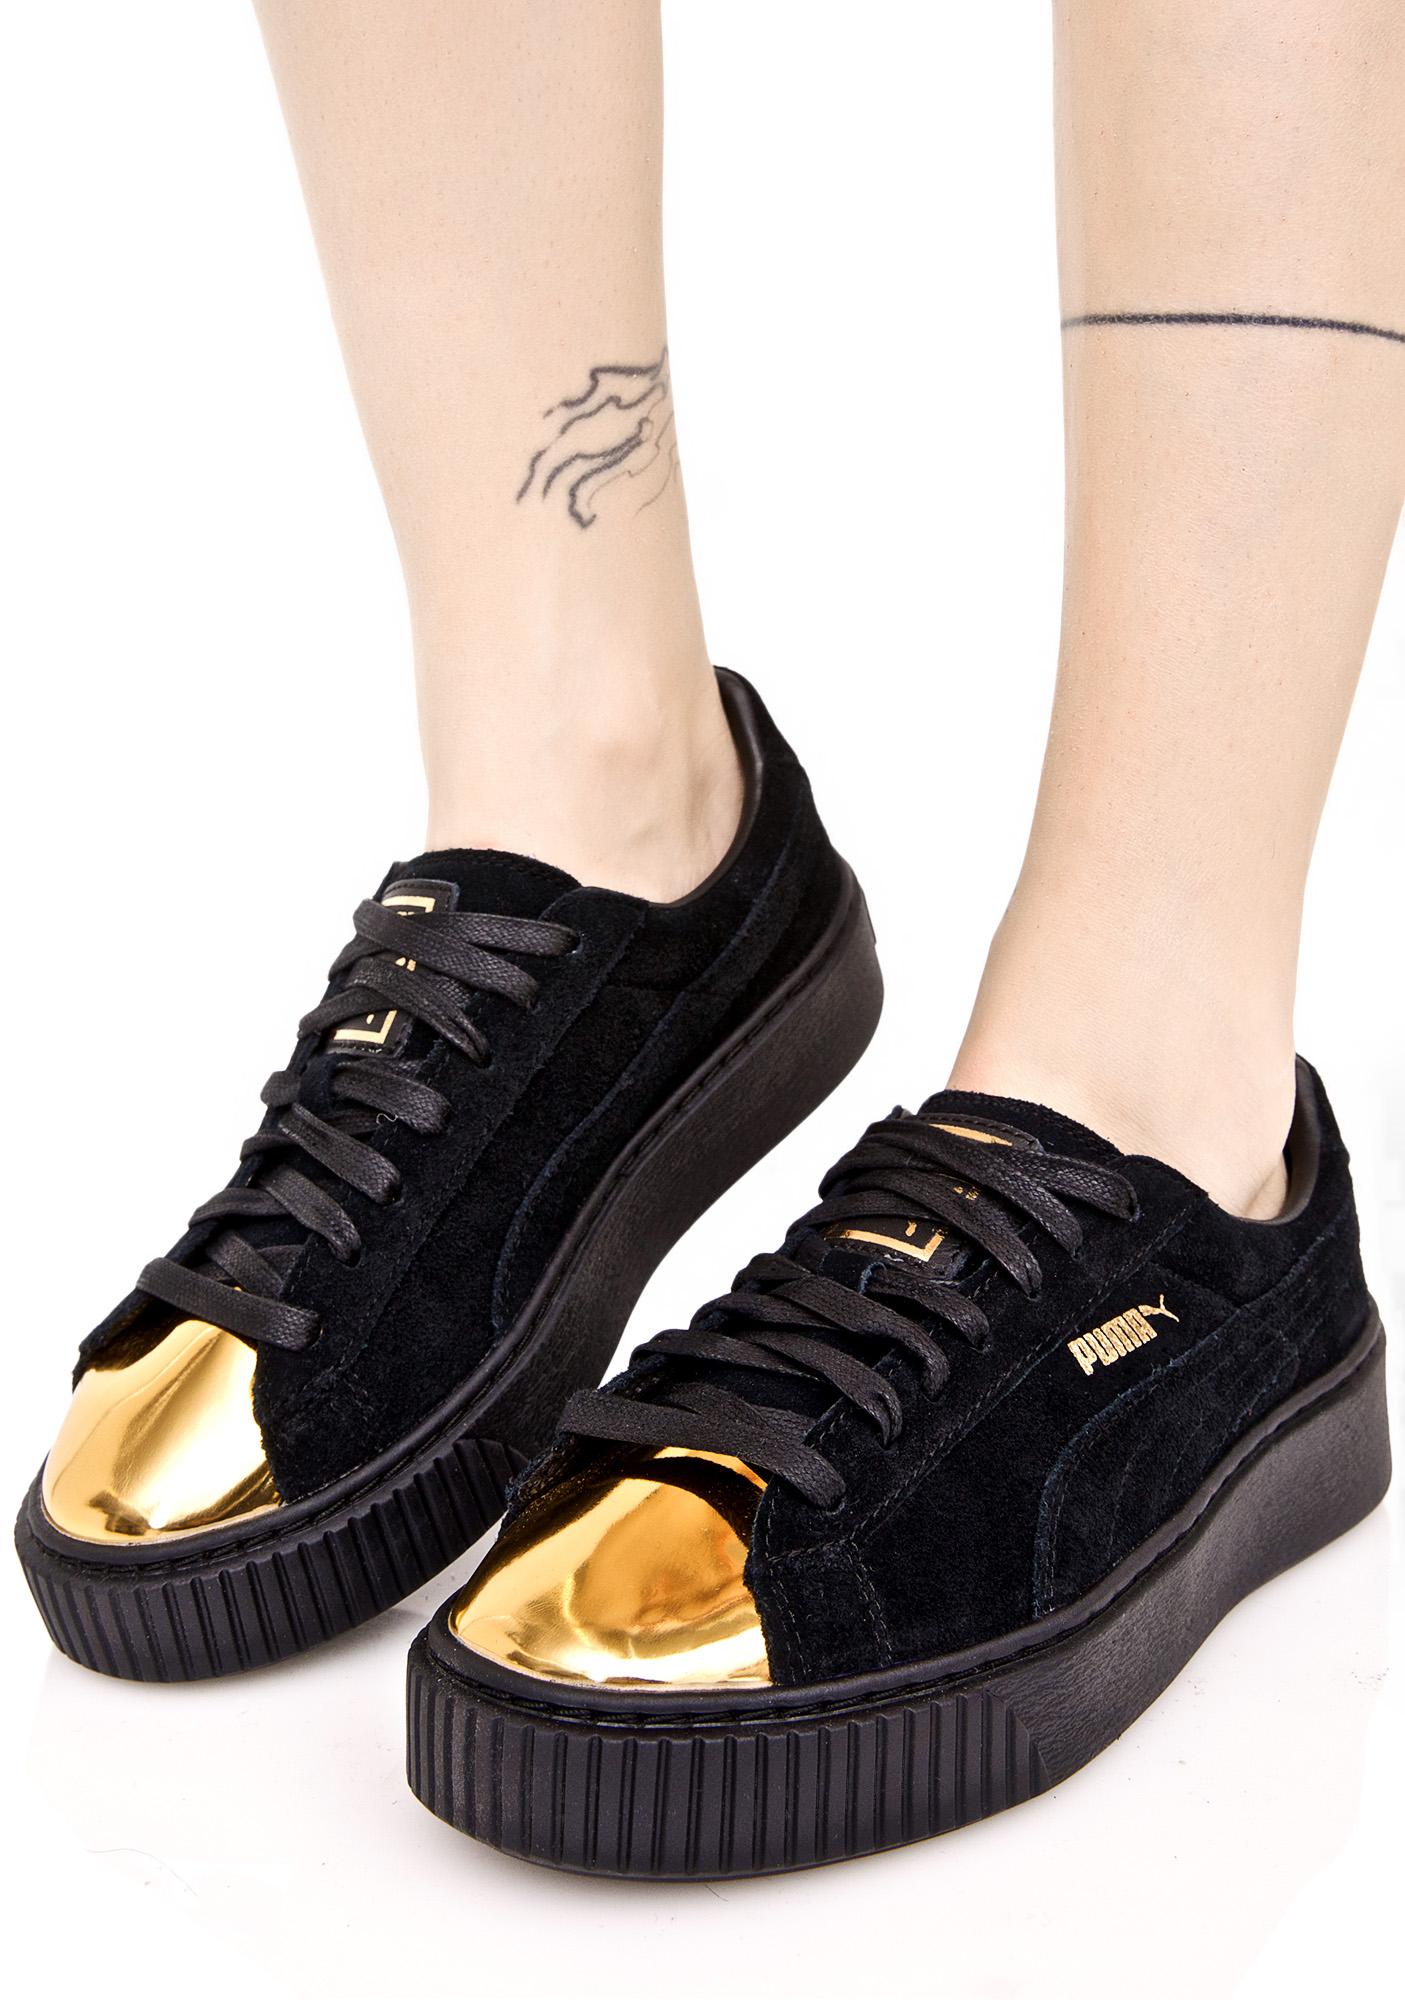 puma gold toe sneakers